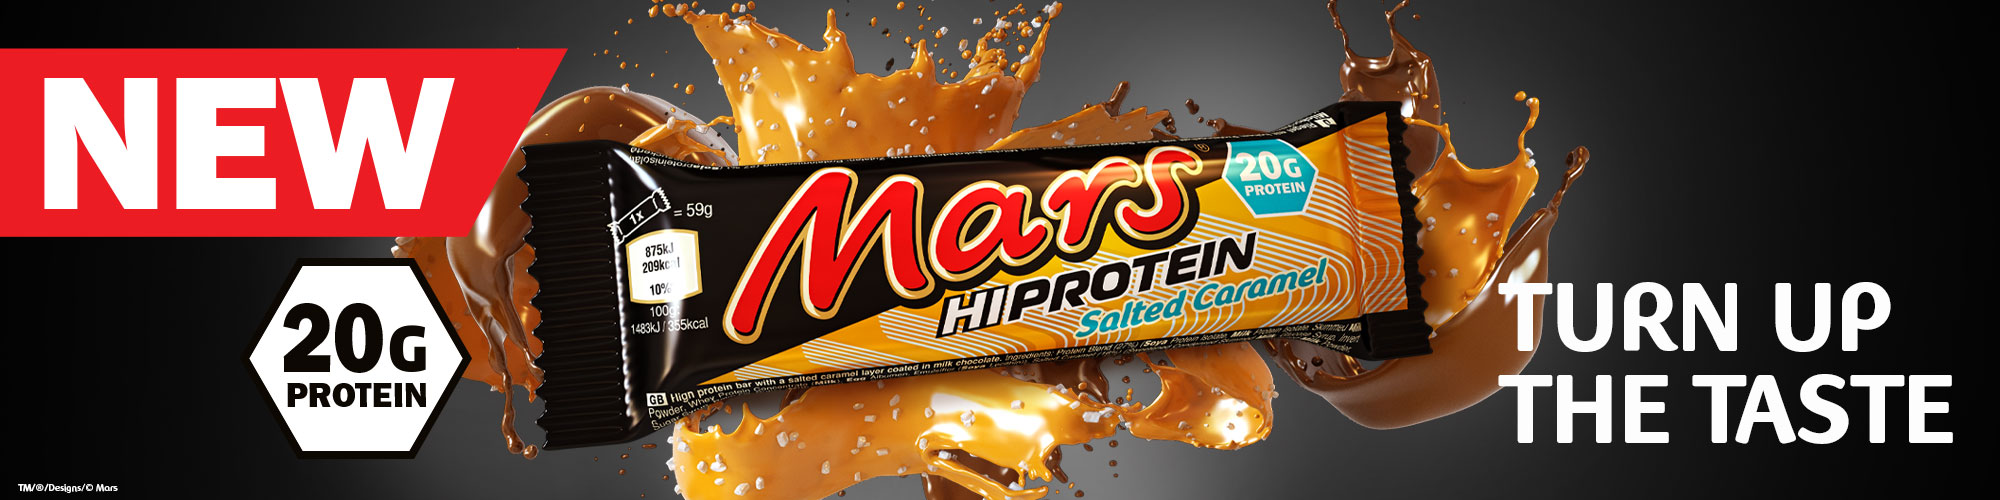 Mars Hi Protein Salted Caramel